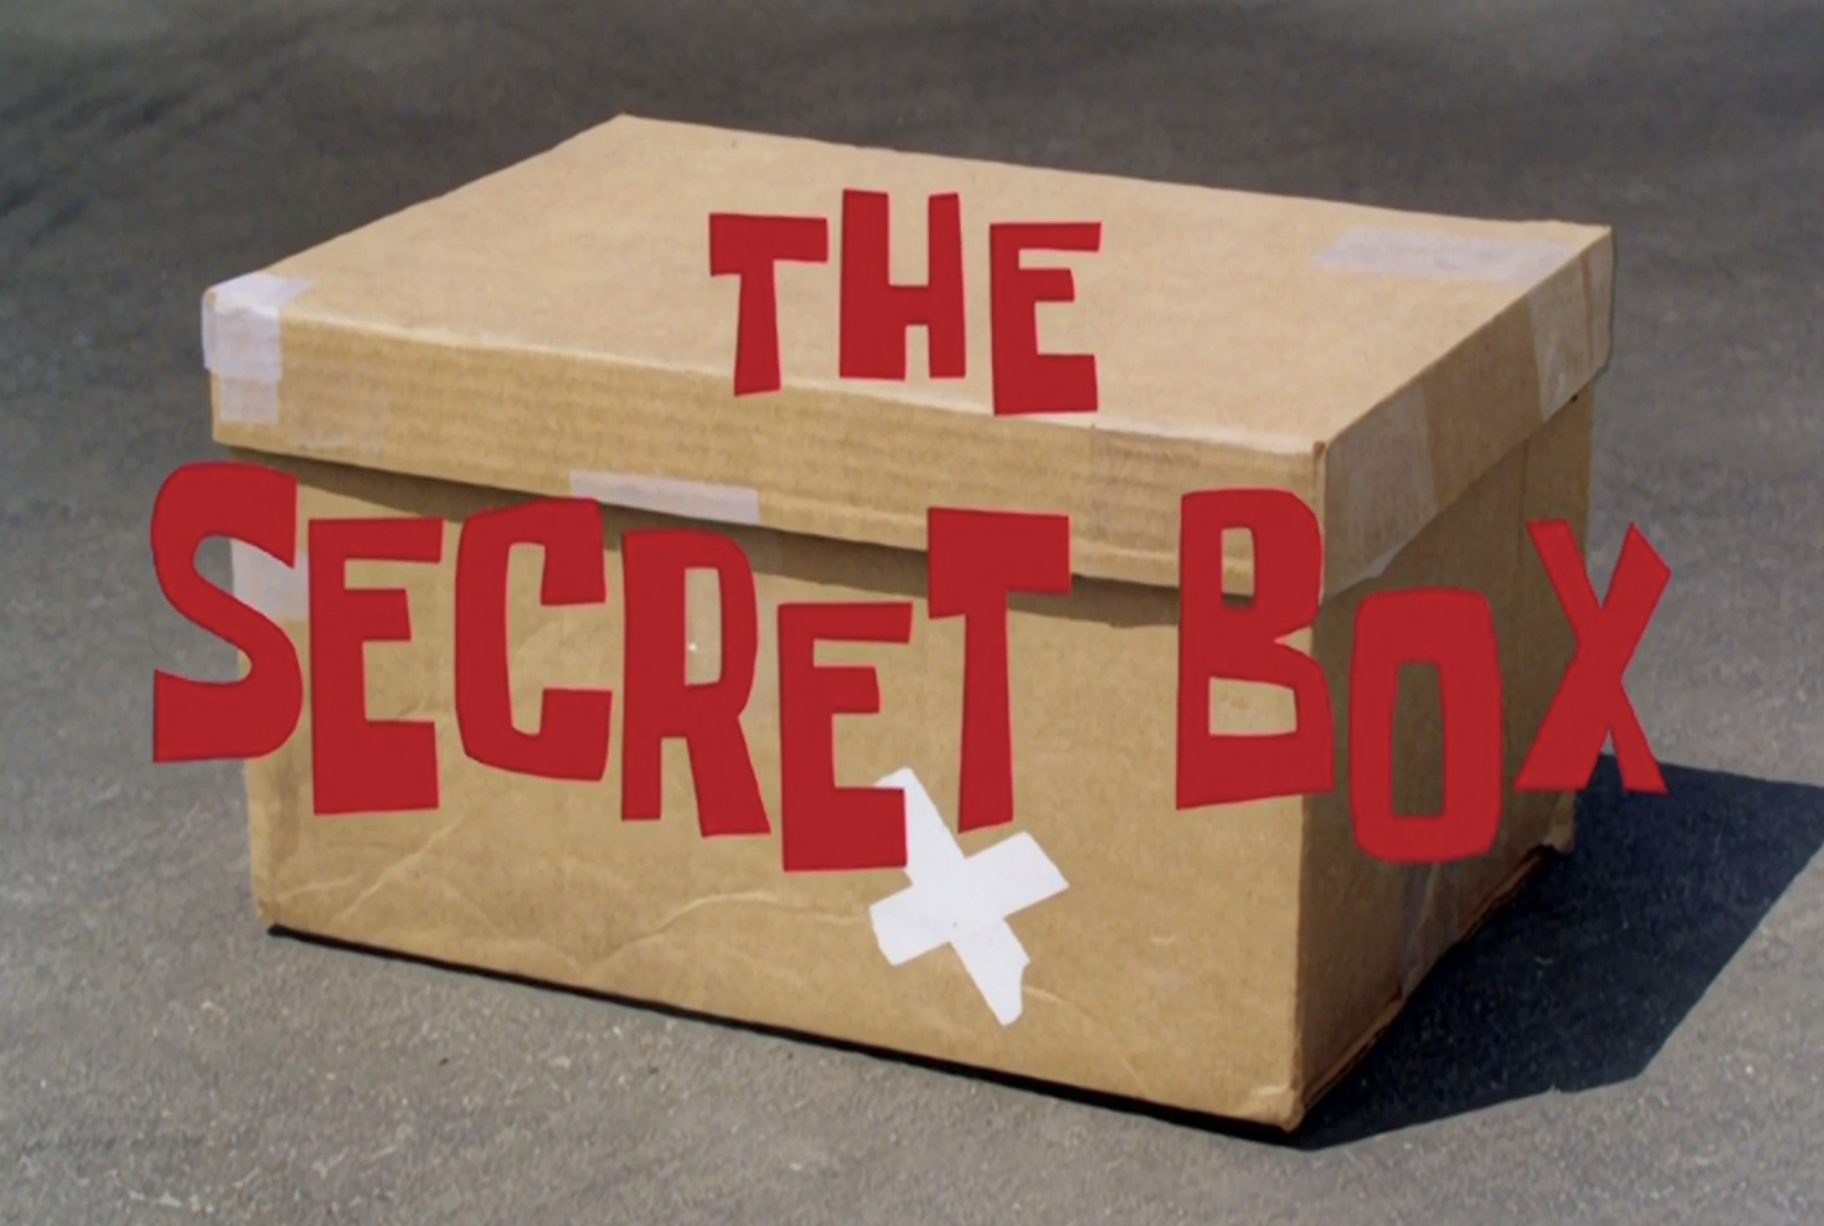 Fizzi box. Secret Box. Секретная коробка. Коробка с надписью. Коробка с секретом.